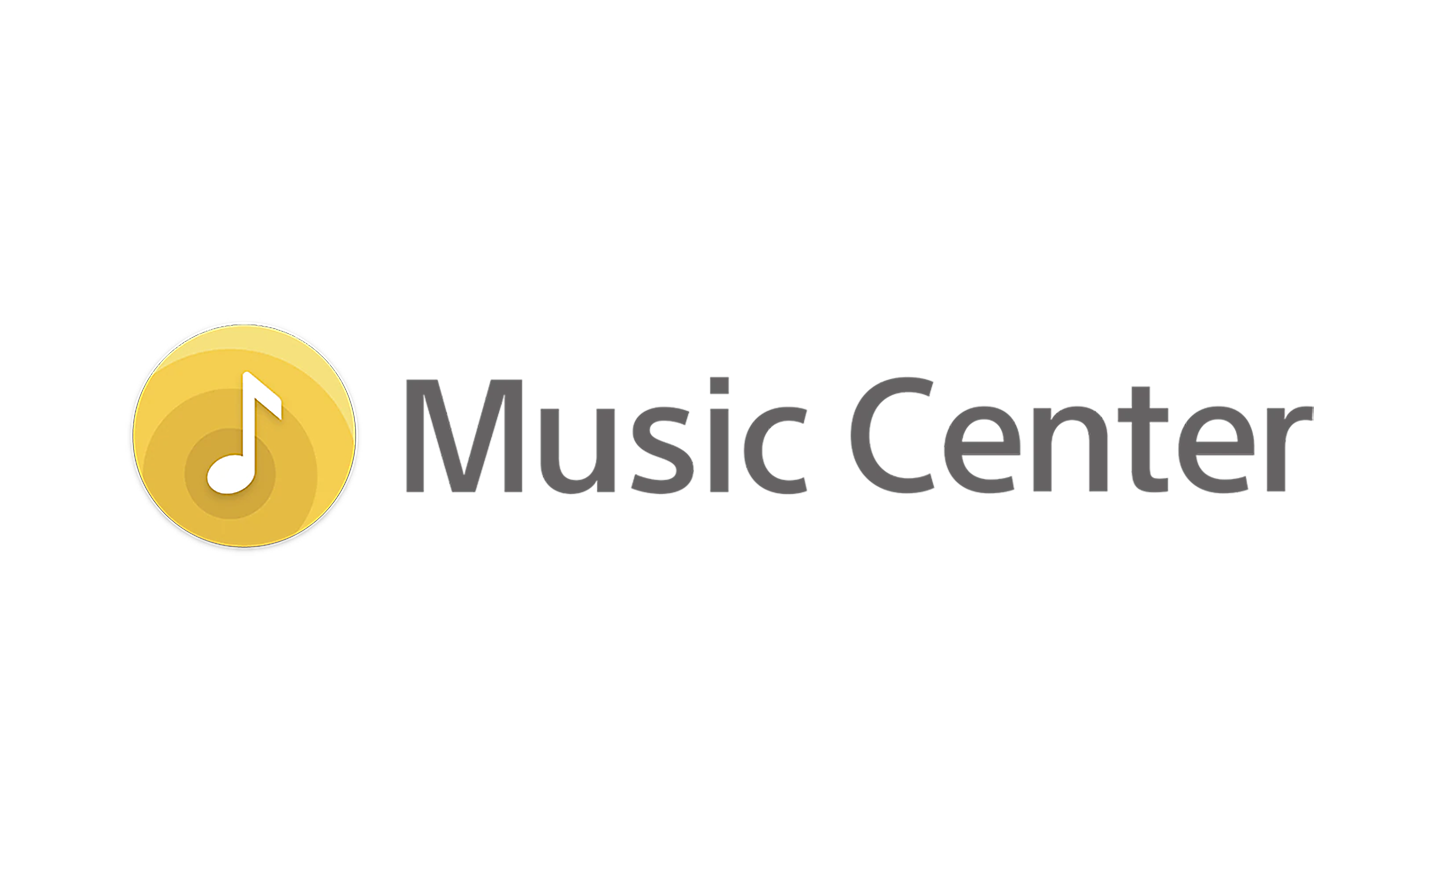 Image of the Sony Music Center app logo